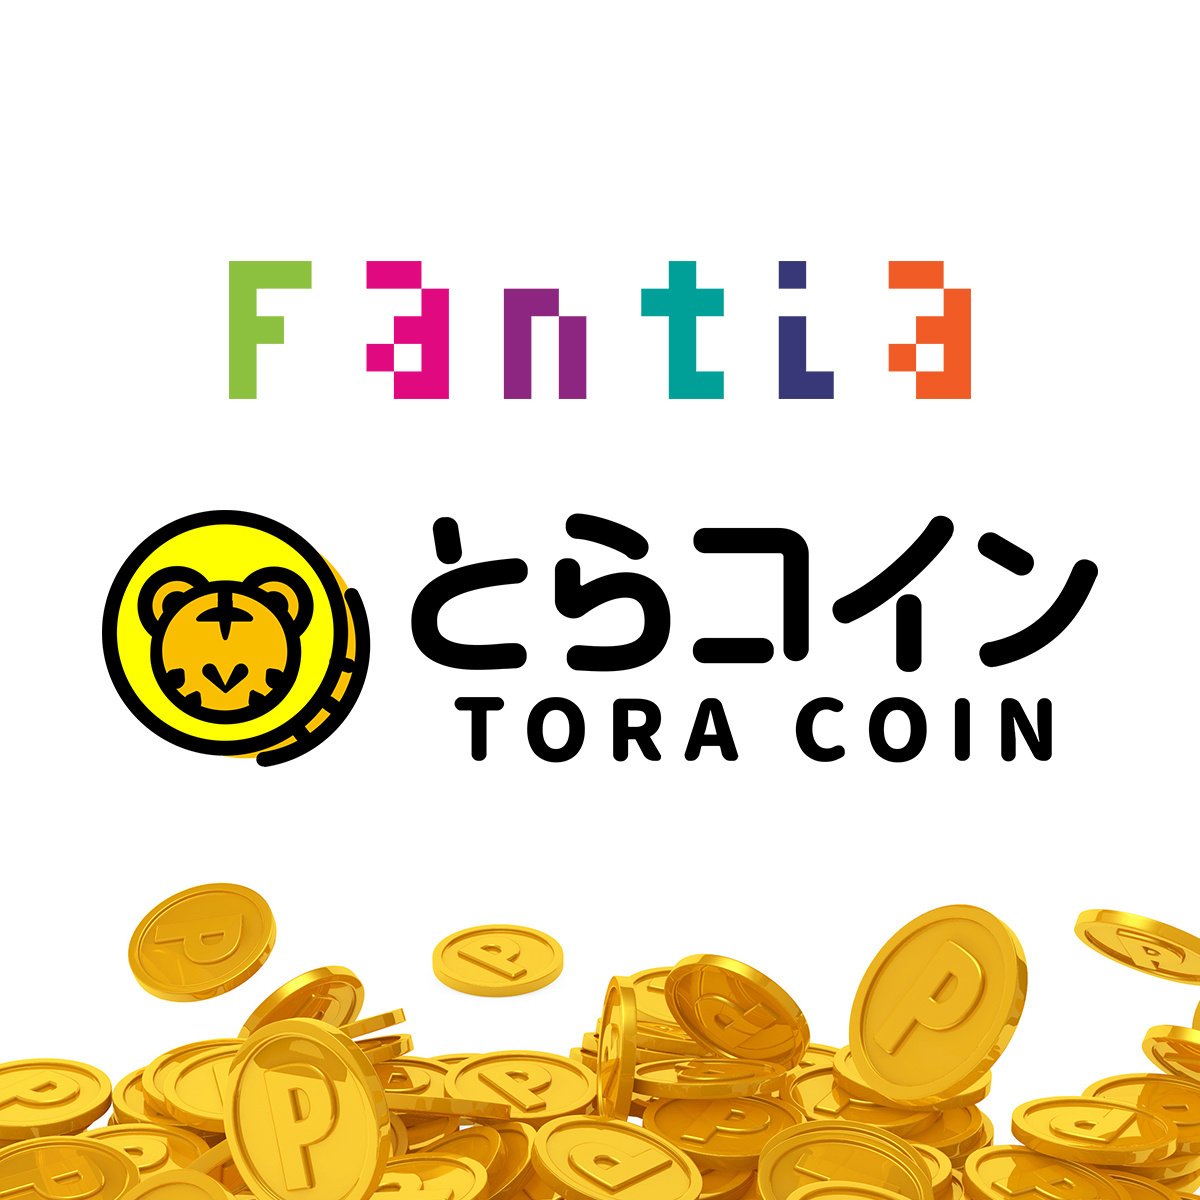 Buy tora coin